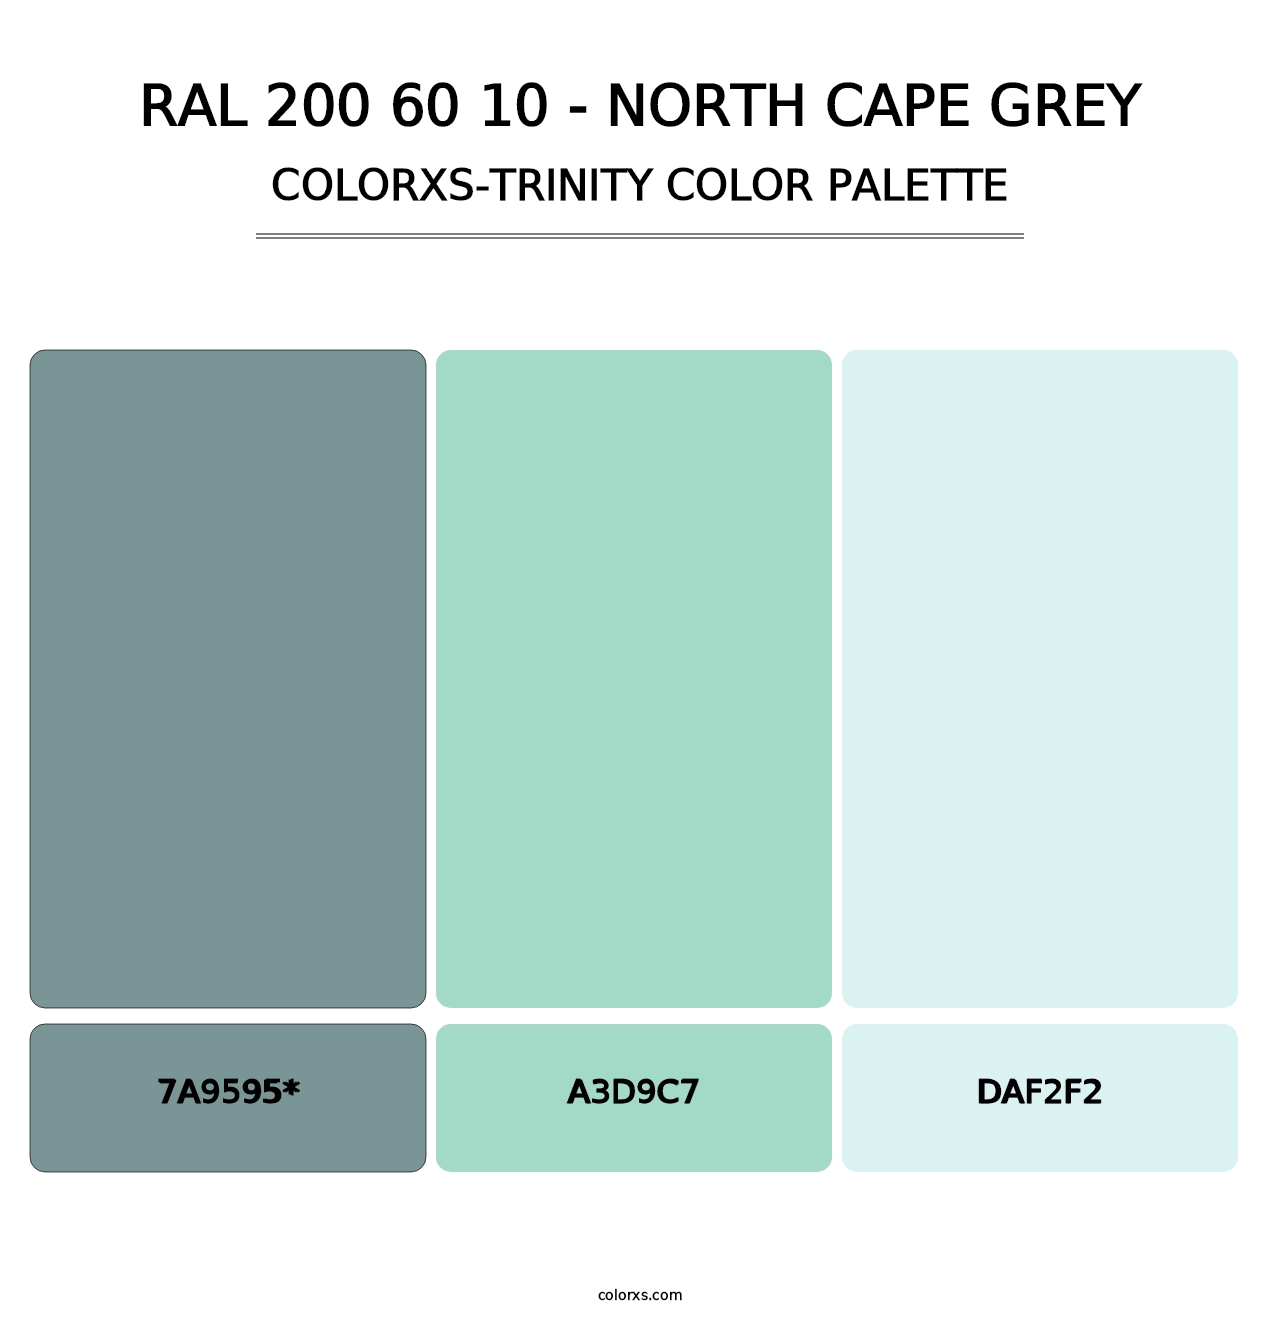 RAL 200 60 10 - North Cape Grey - Colorxs Trinity Palette